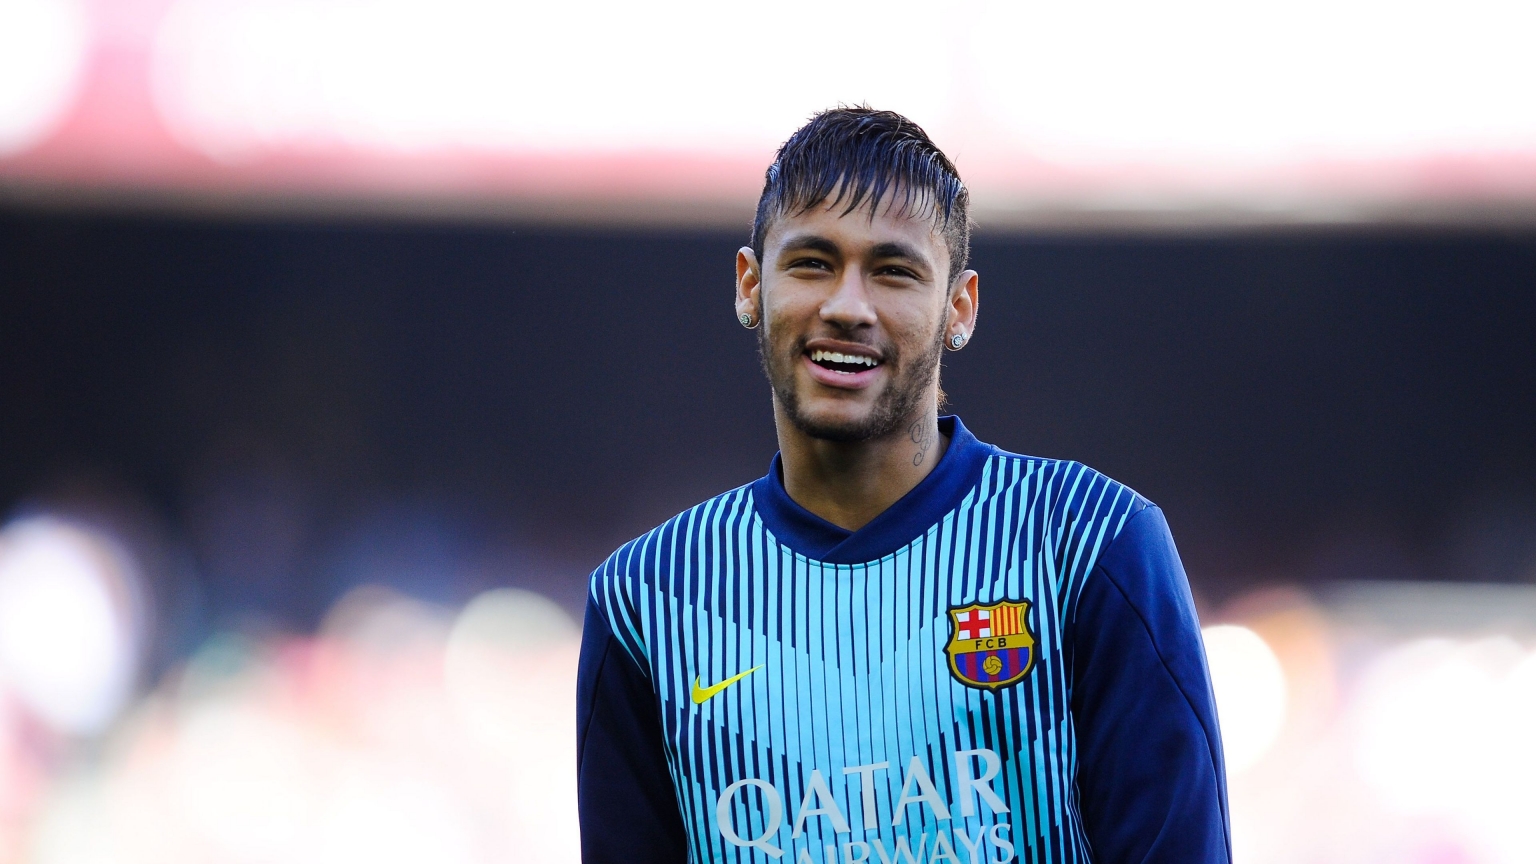 Neymar Training for 1536 x 864 HDTV resolution